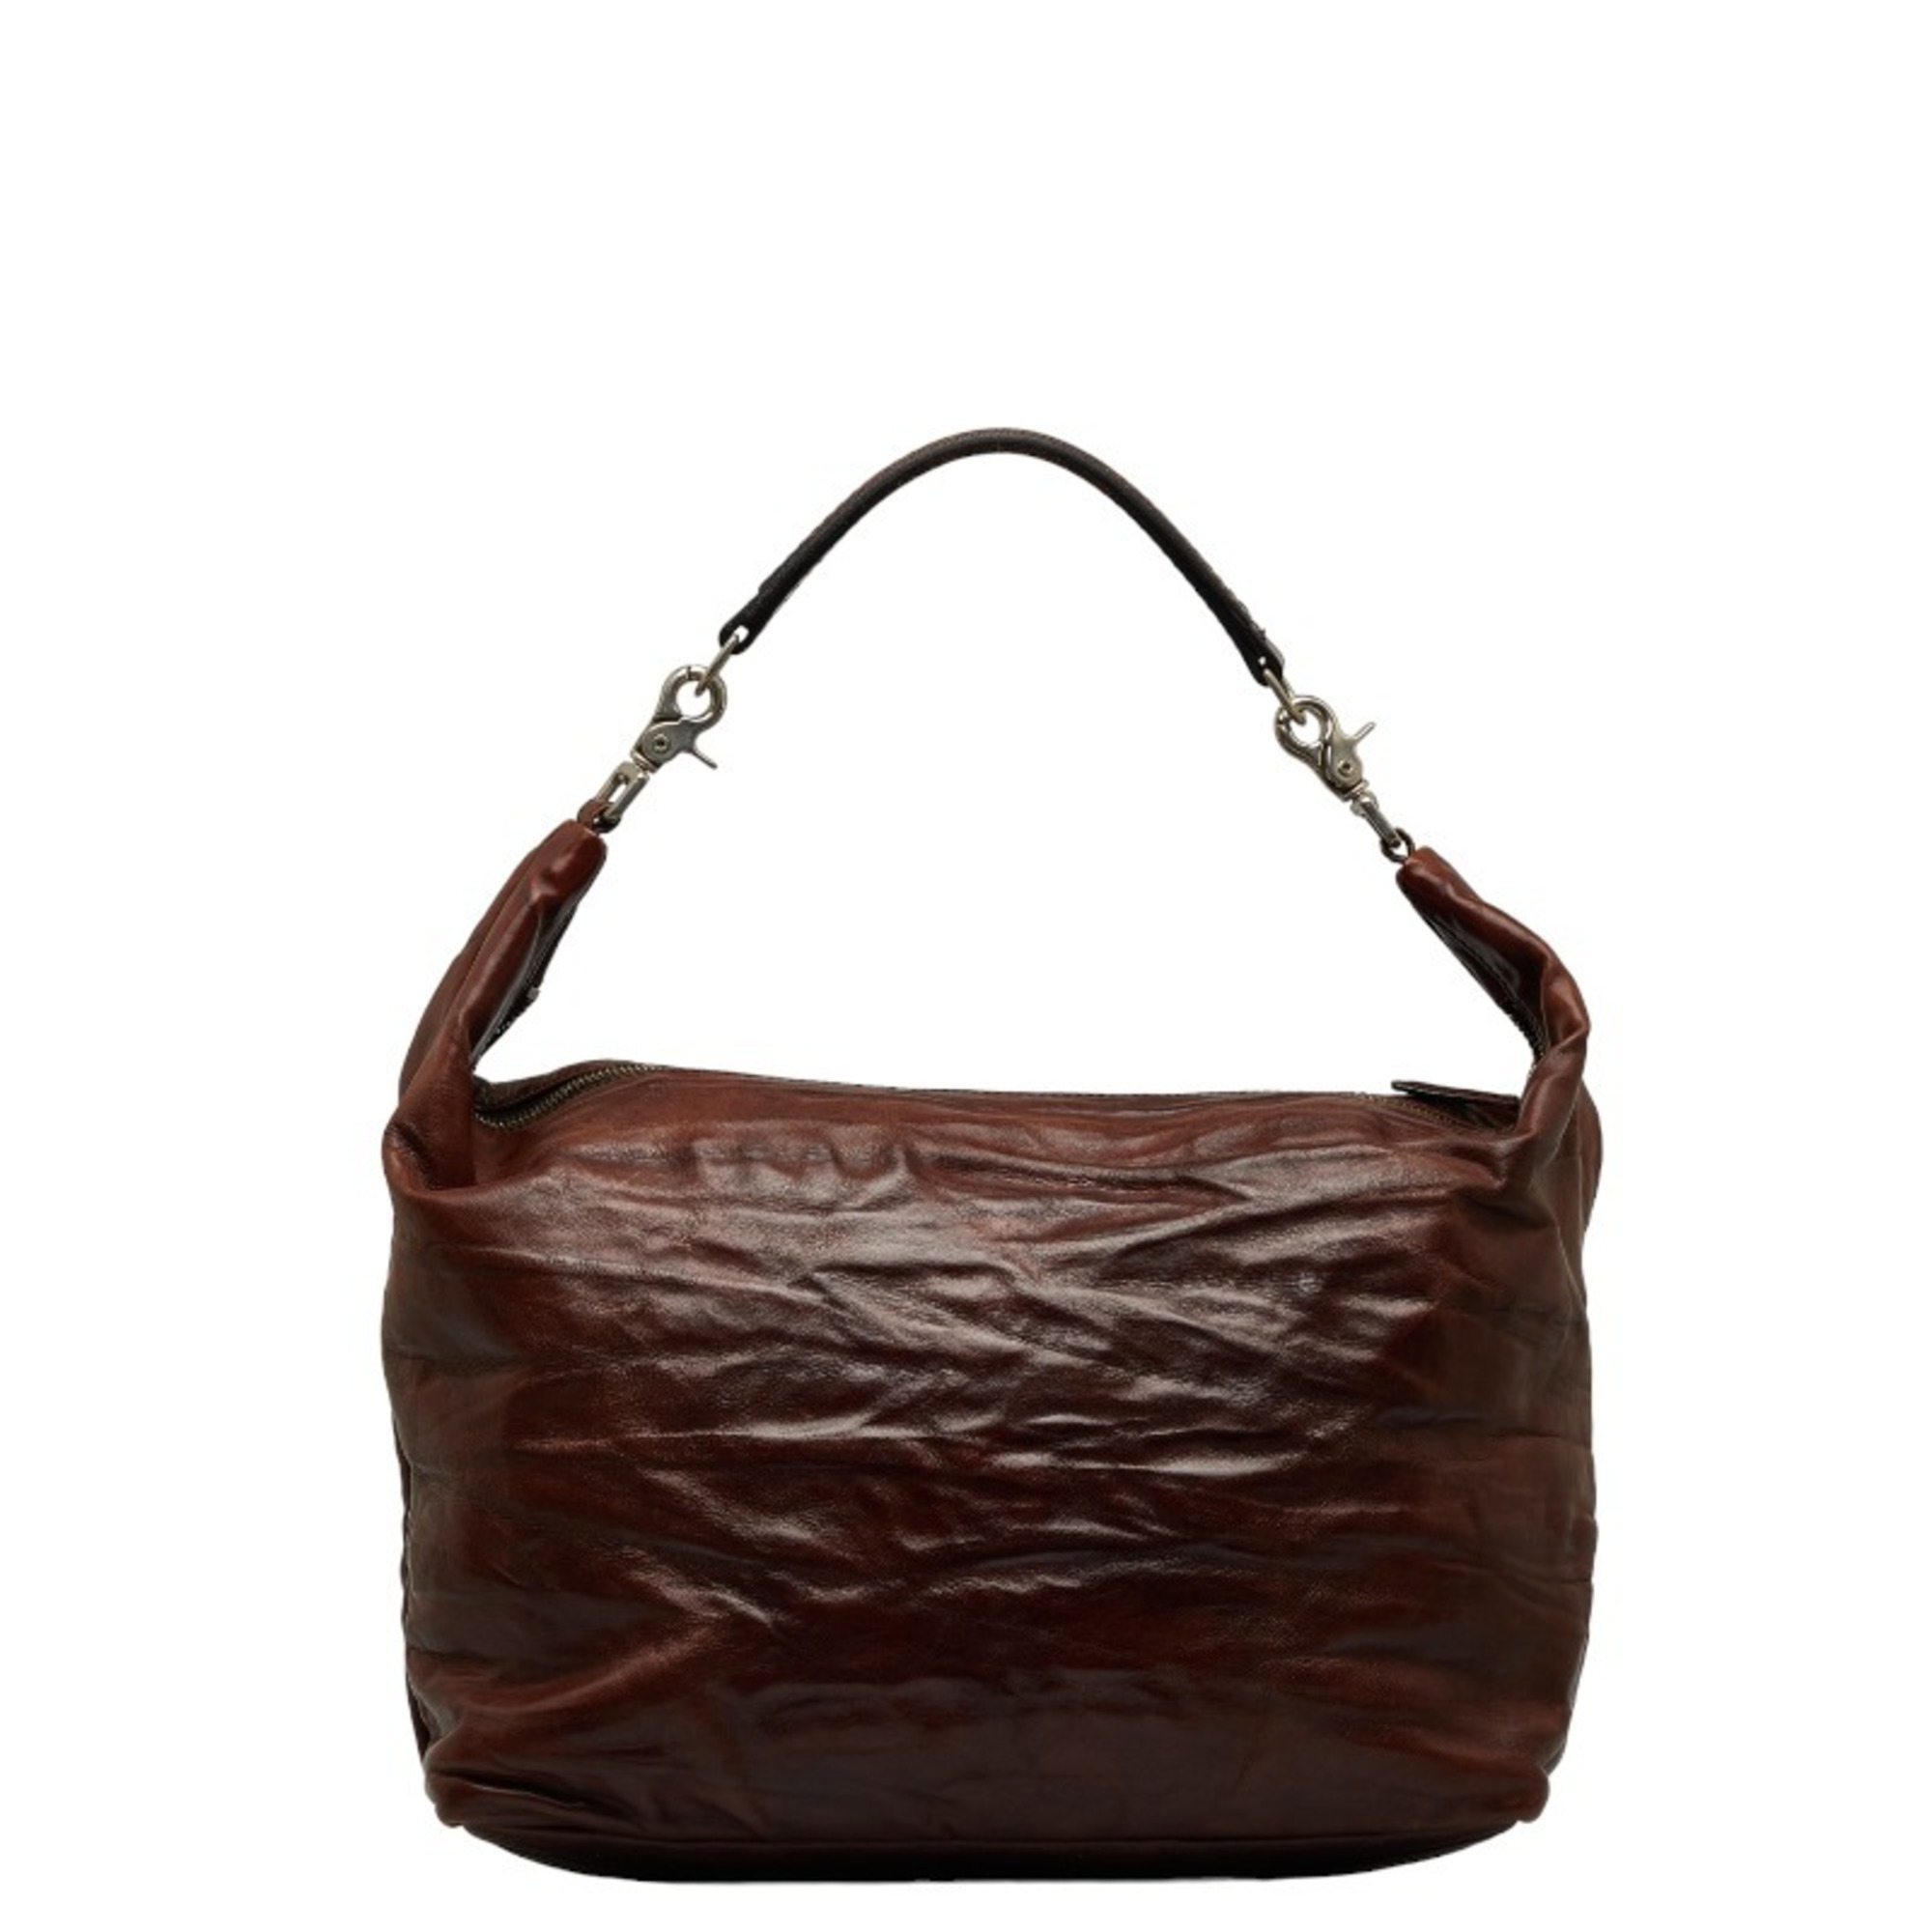 Lodi Daniel & Bob JASMINE RODI Shoulder Bag Handbag Brown Leather Men's